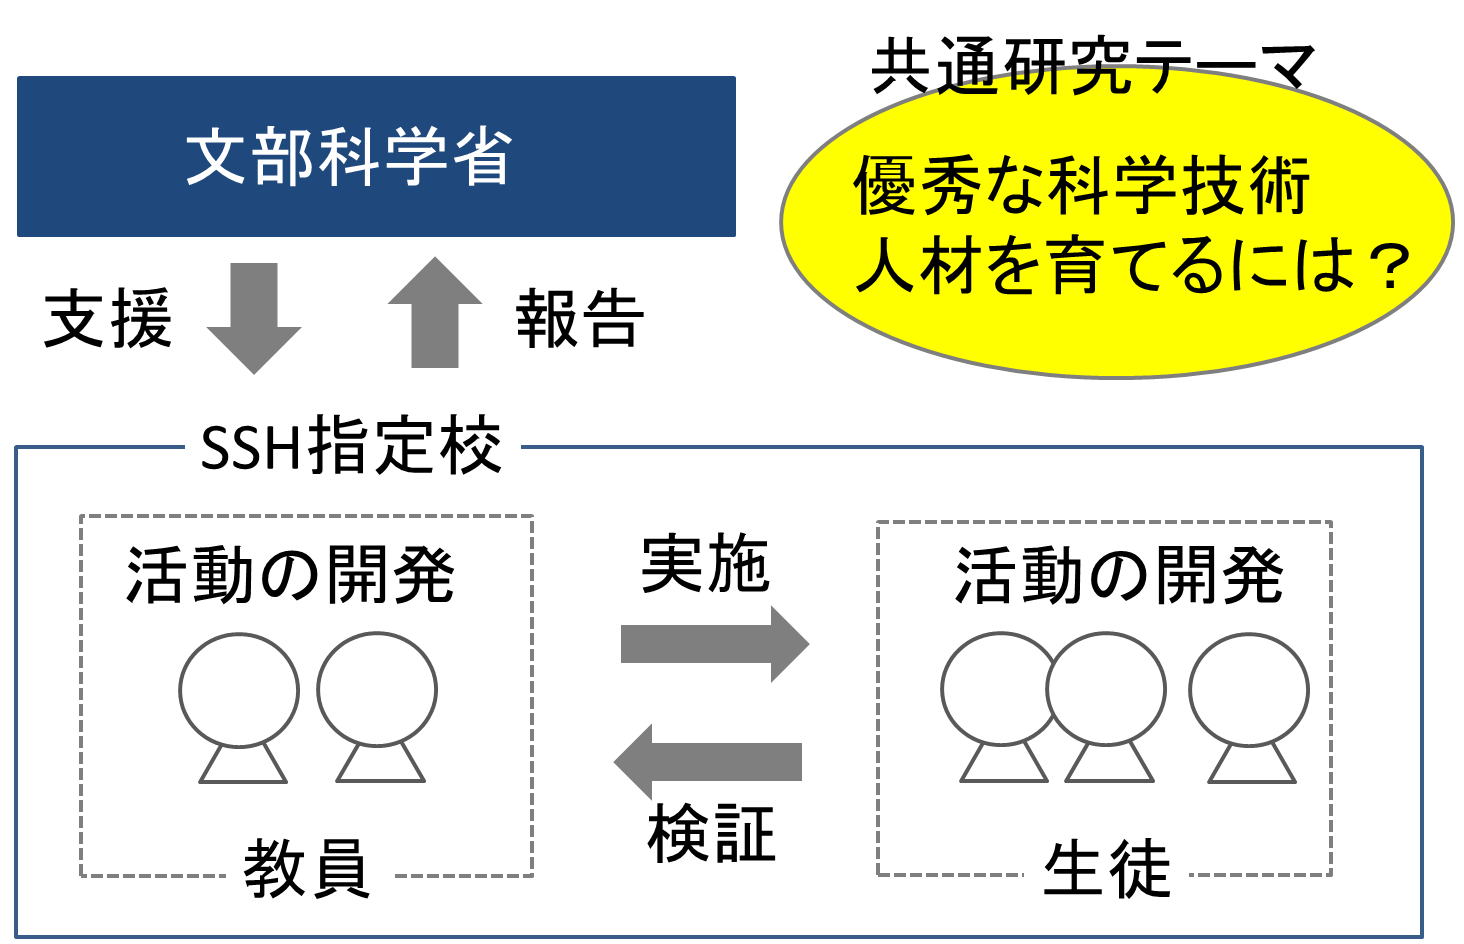 SSH支援体制の図